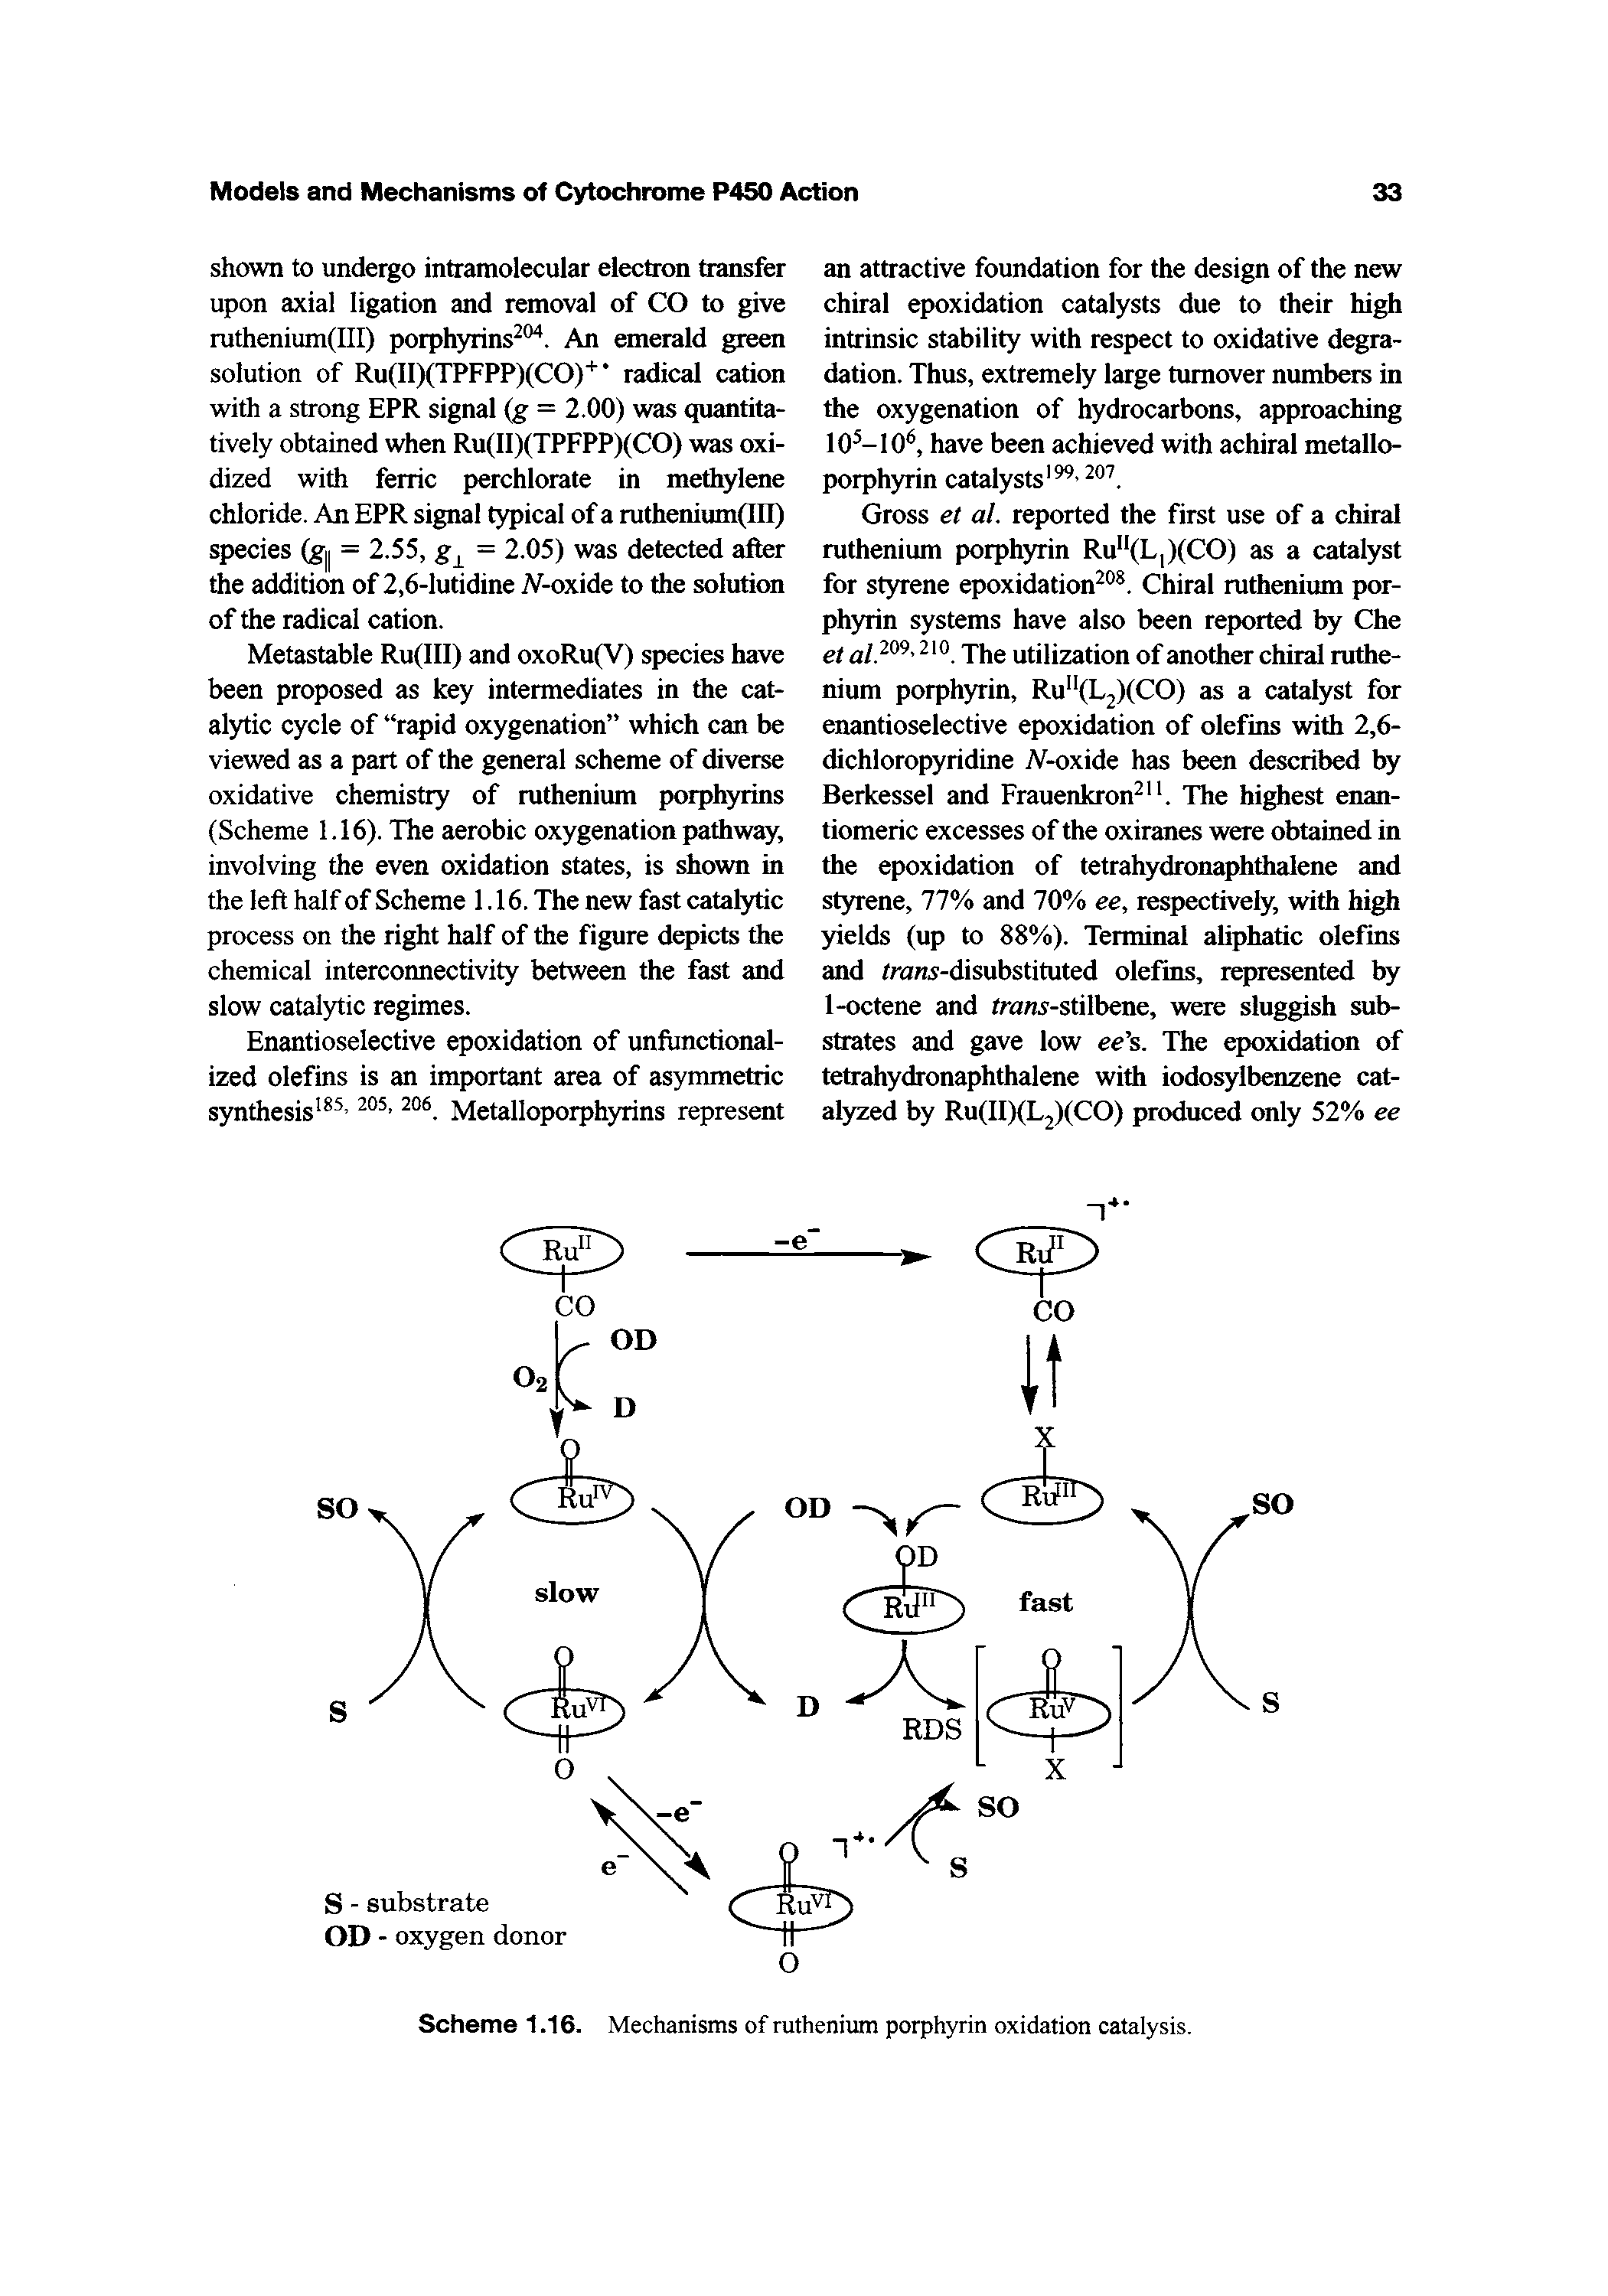 Scheme 1.16. Mechanisms of ruthenium porphyrin oxidation catalysis.